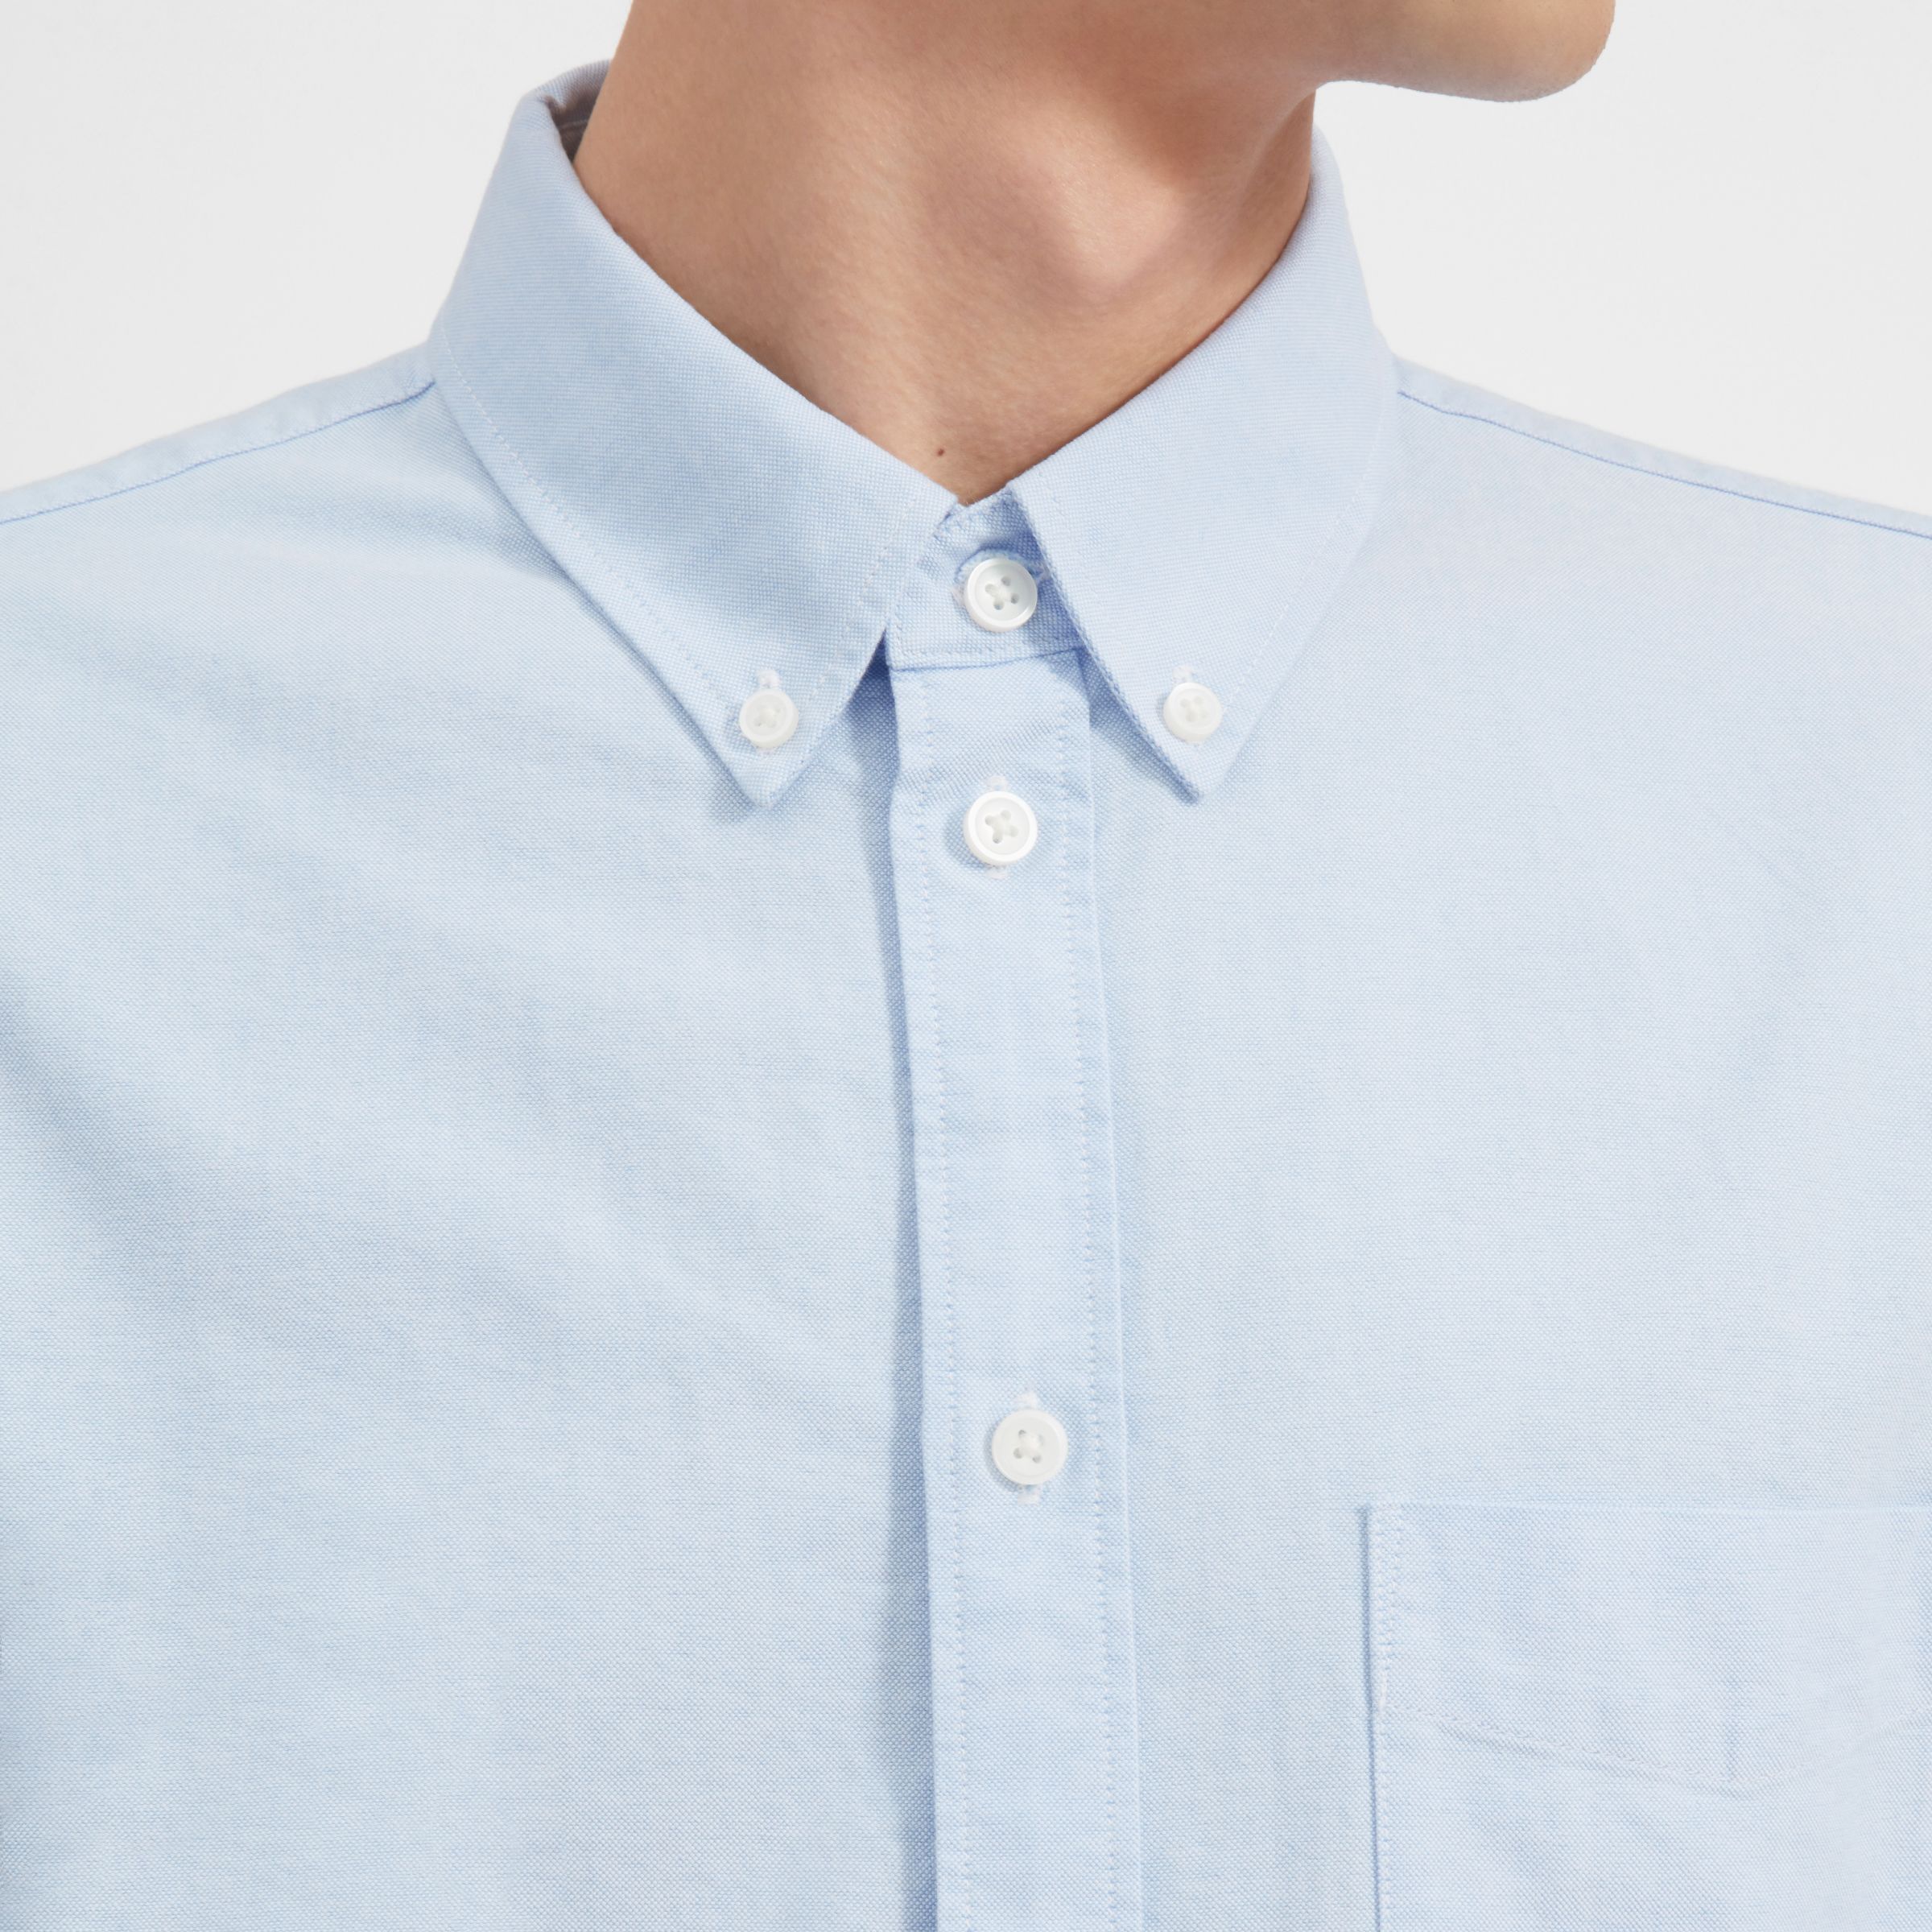 Le Original' Blue Contrast Collar Oxford Shirt